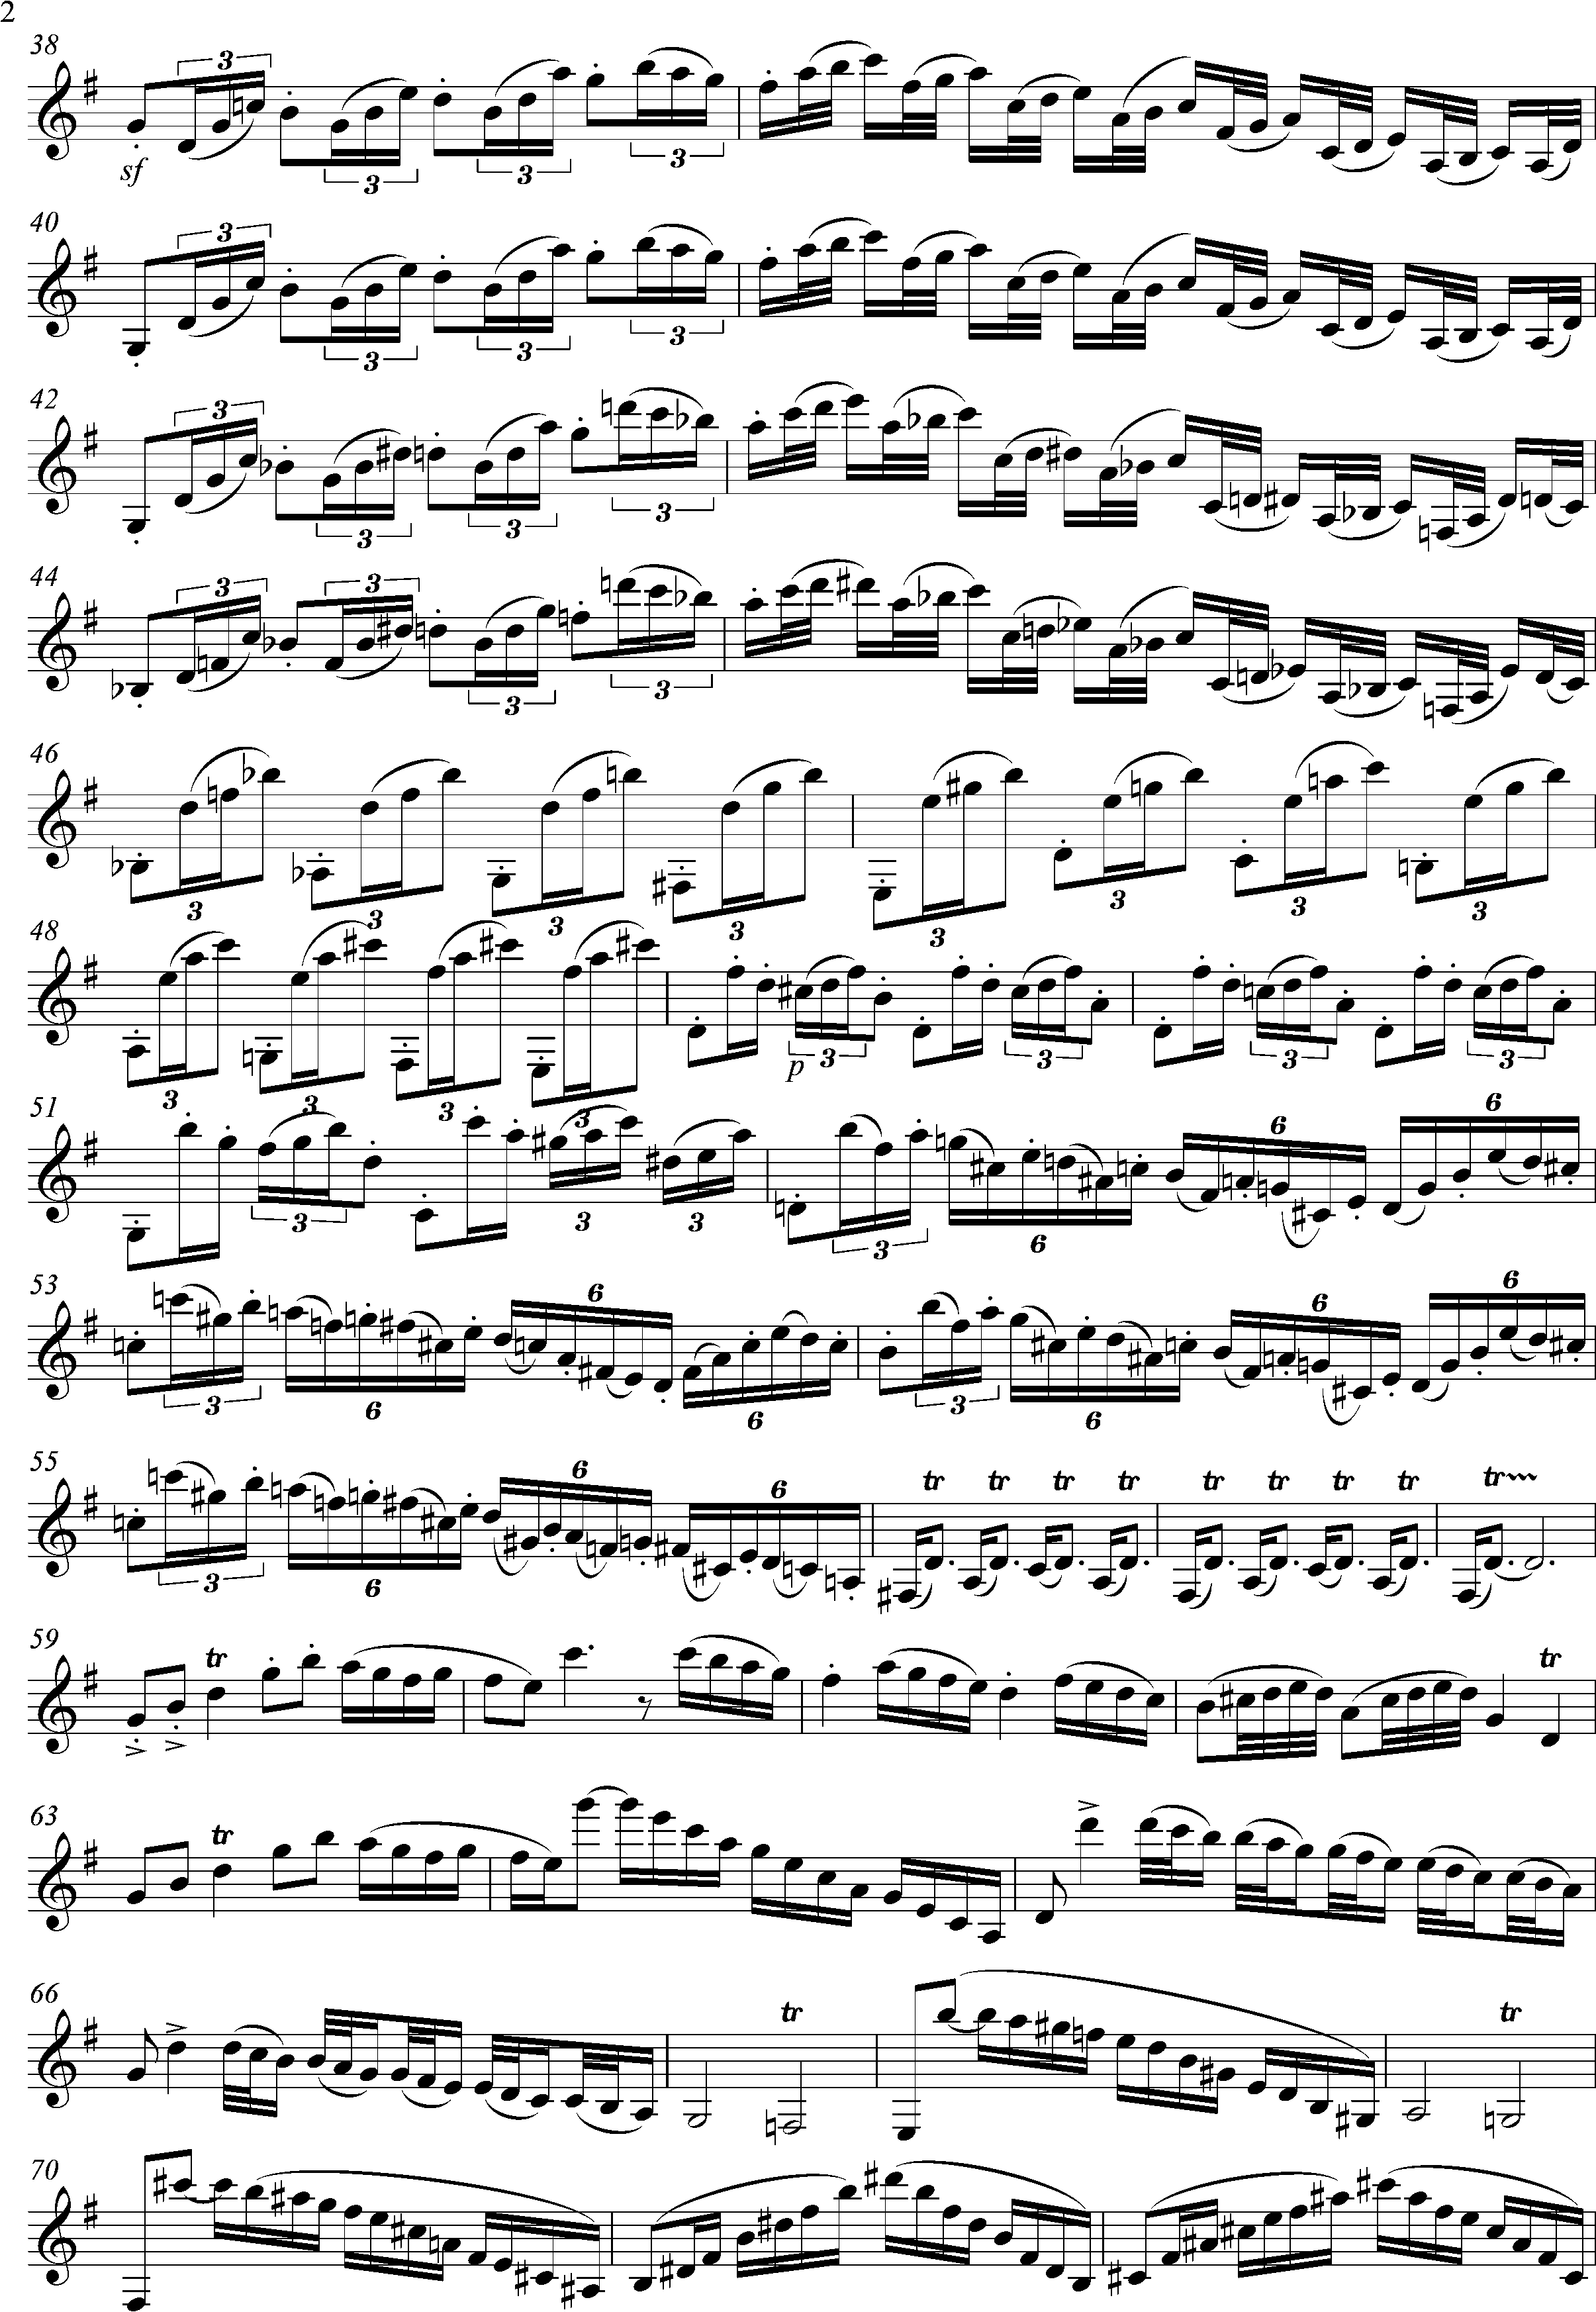 No61, Op.1, Page 1